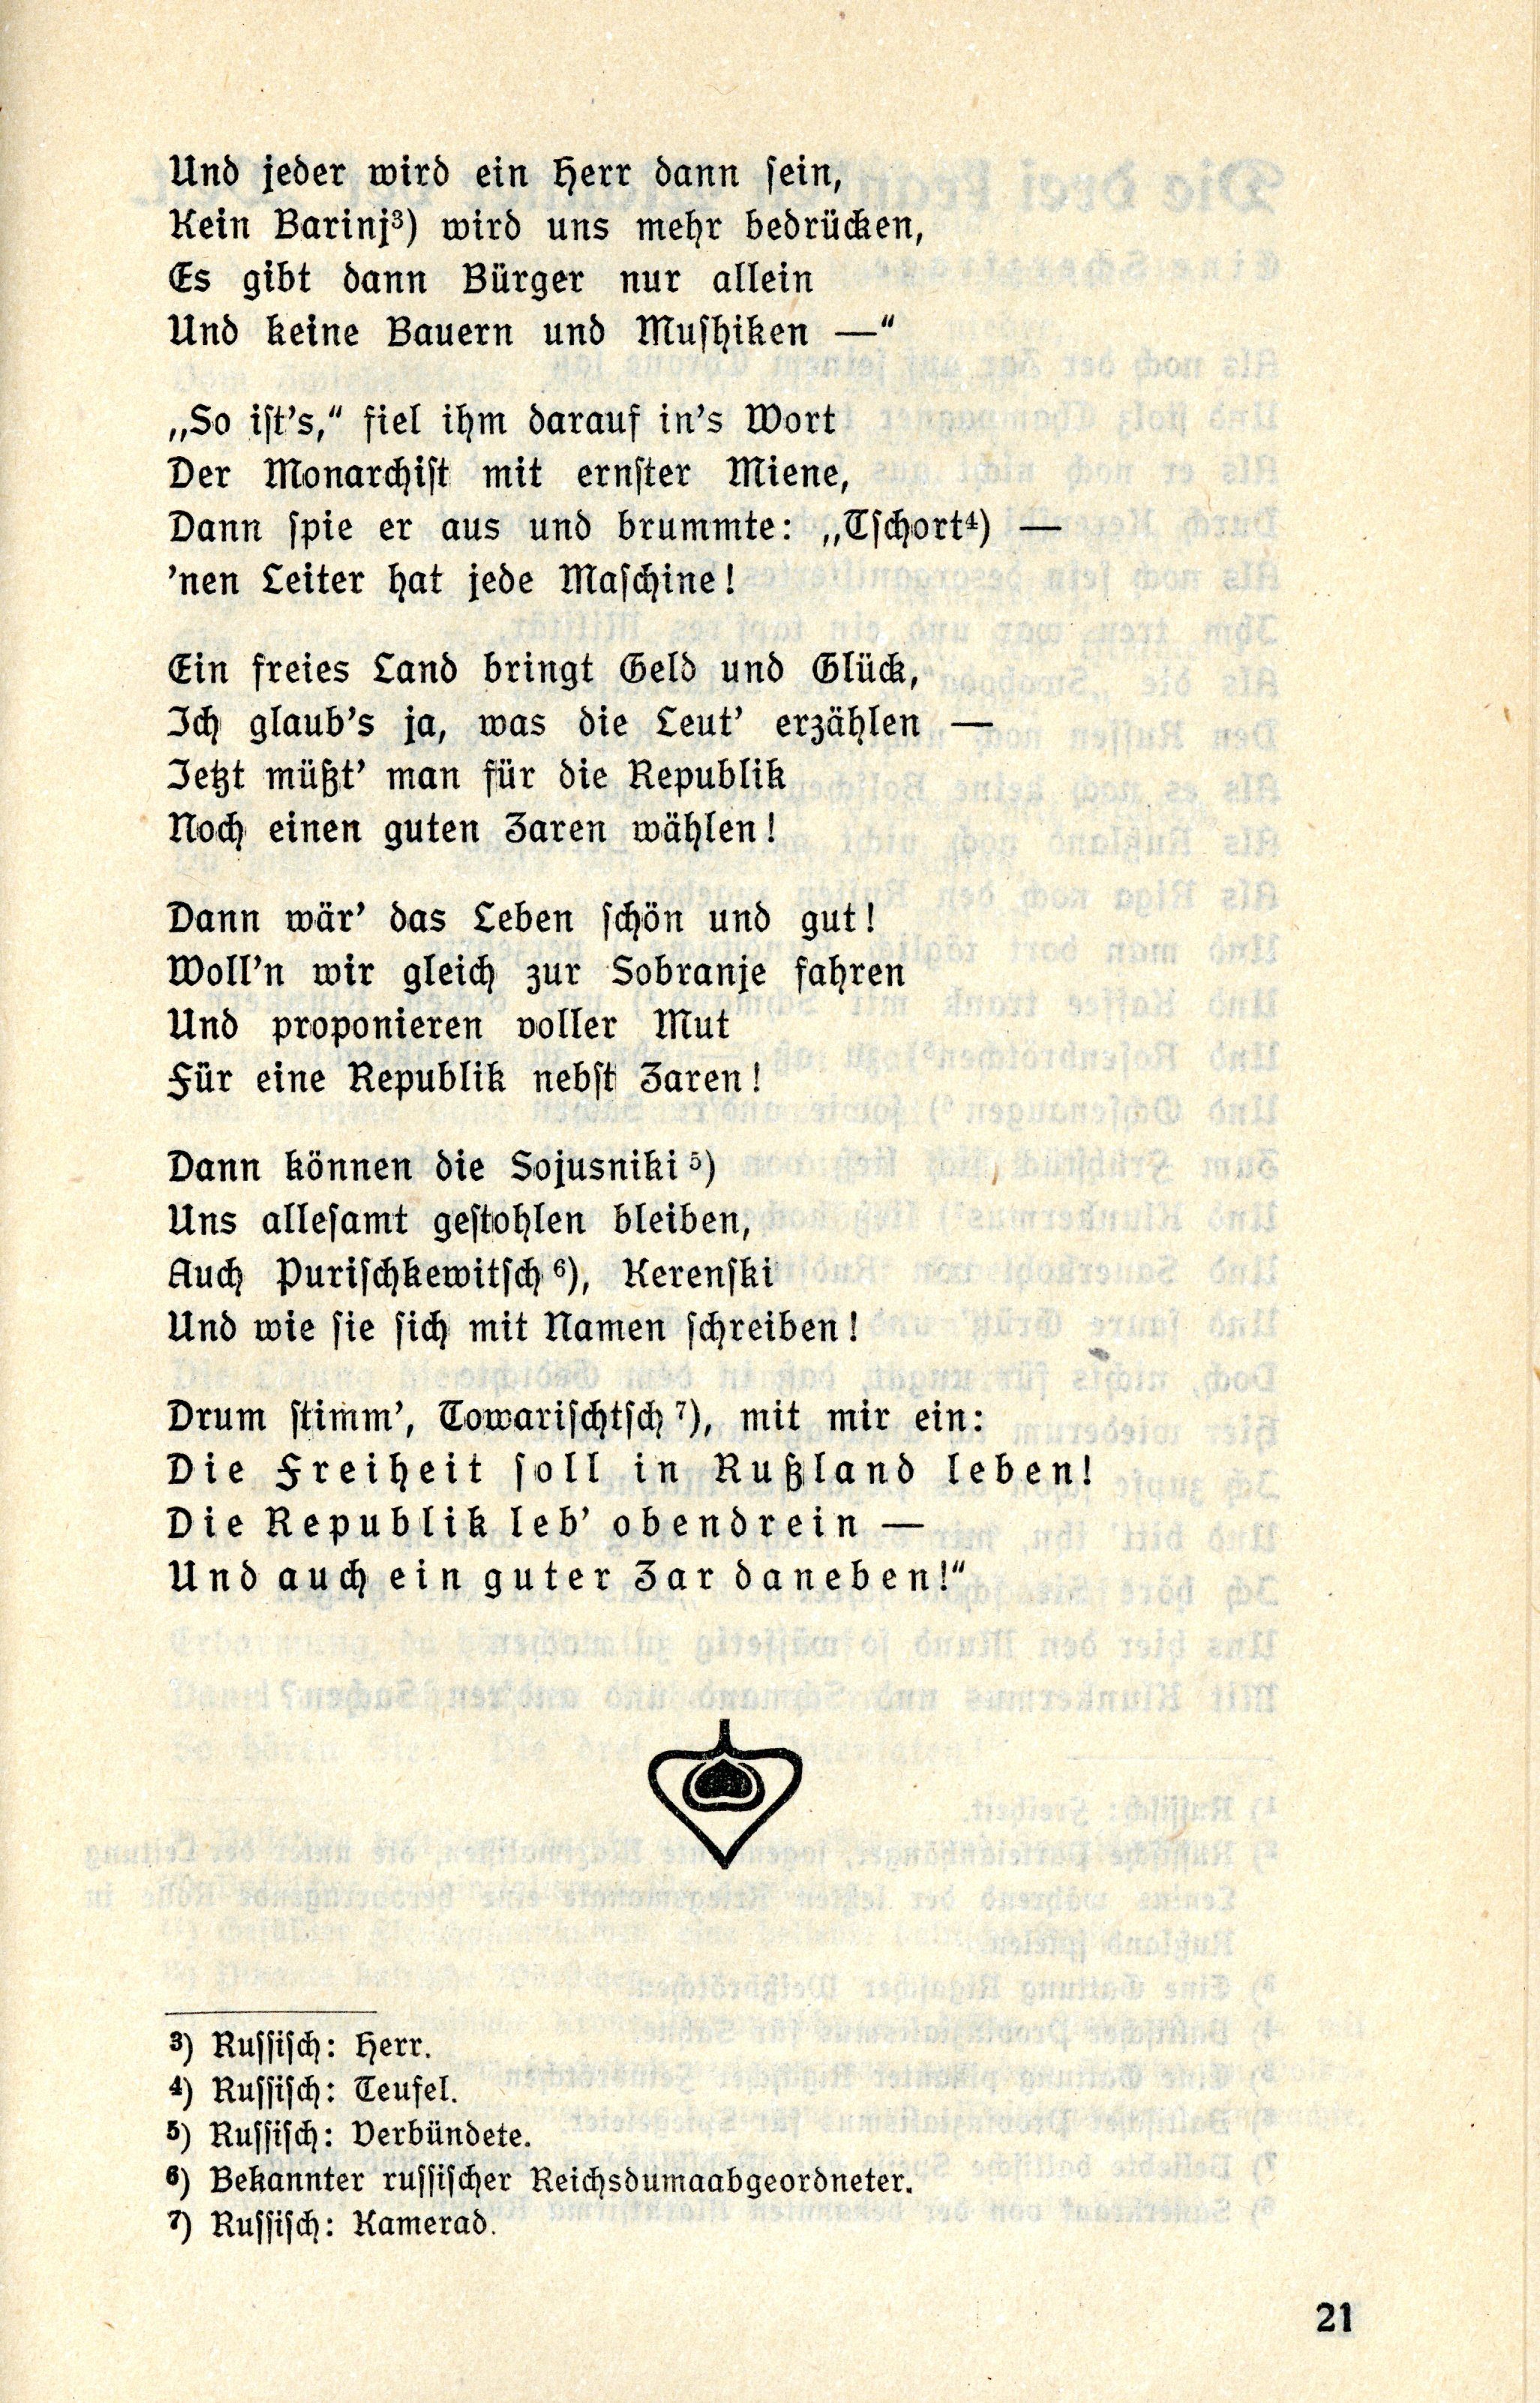 Der Balte im Maulkorb (1917) | 22. (21) Основной текст